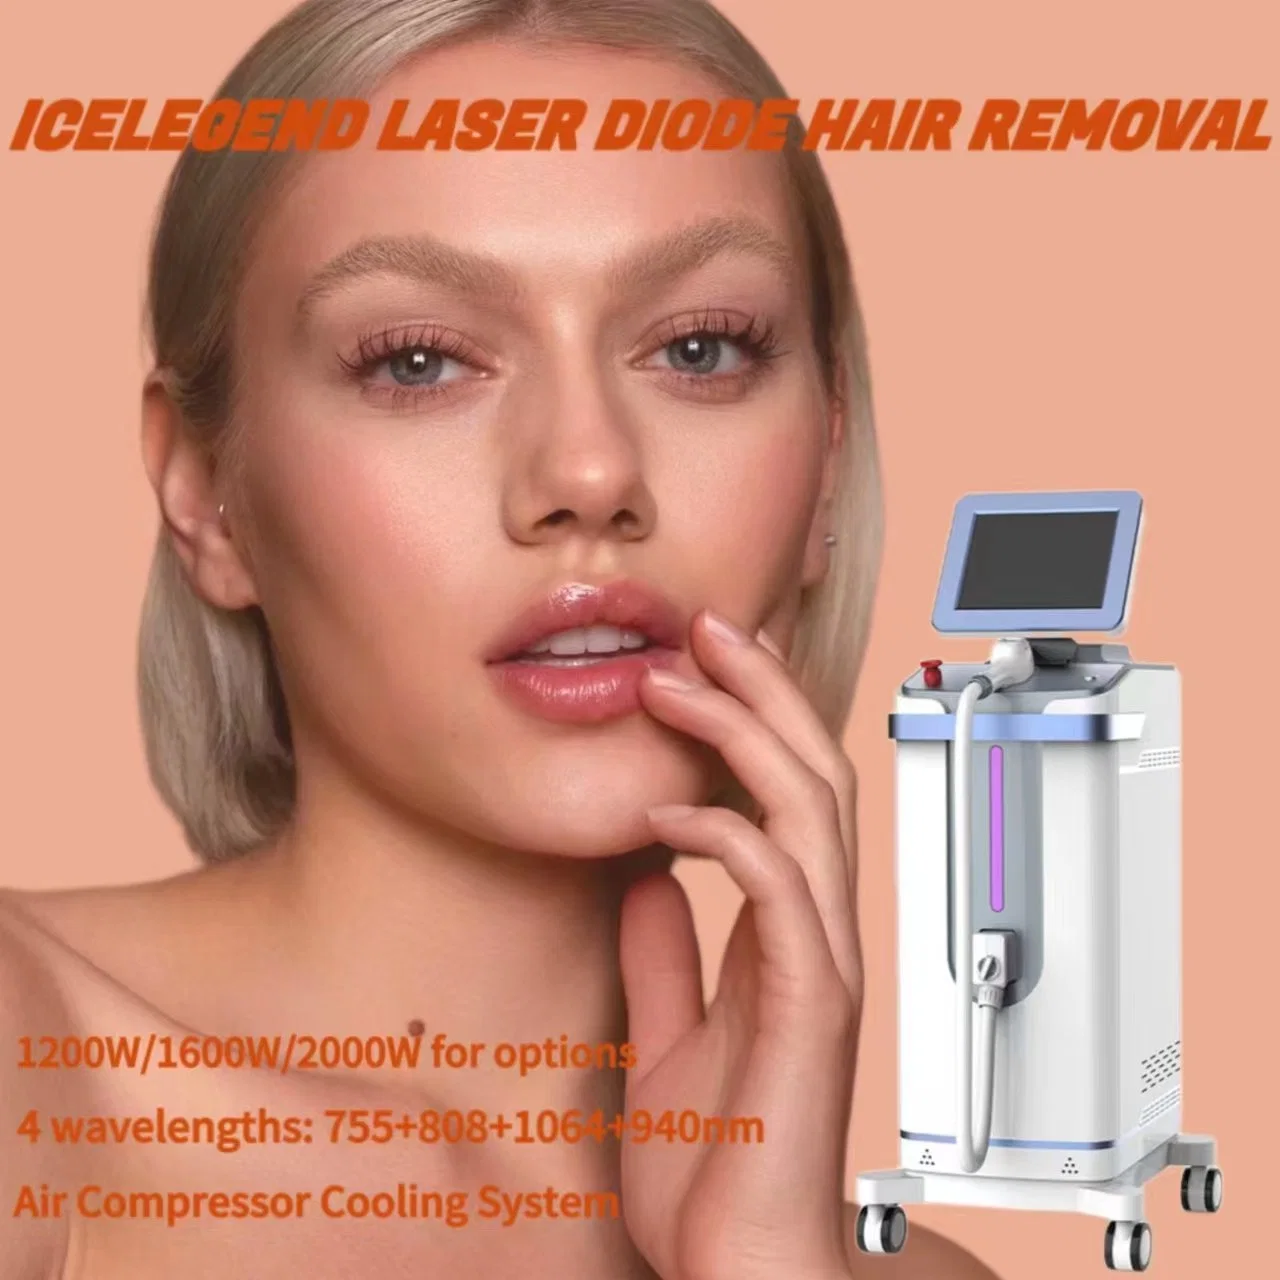 2023 808 нм 1064 нм 755 нм Ice Laser Hair Removal Диод Лазер Устройство для удаления волос